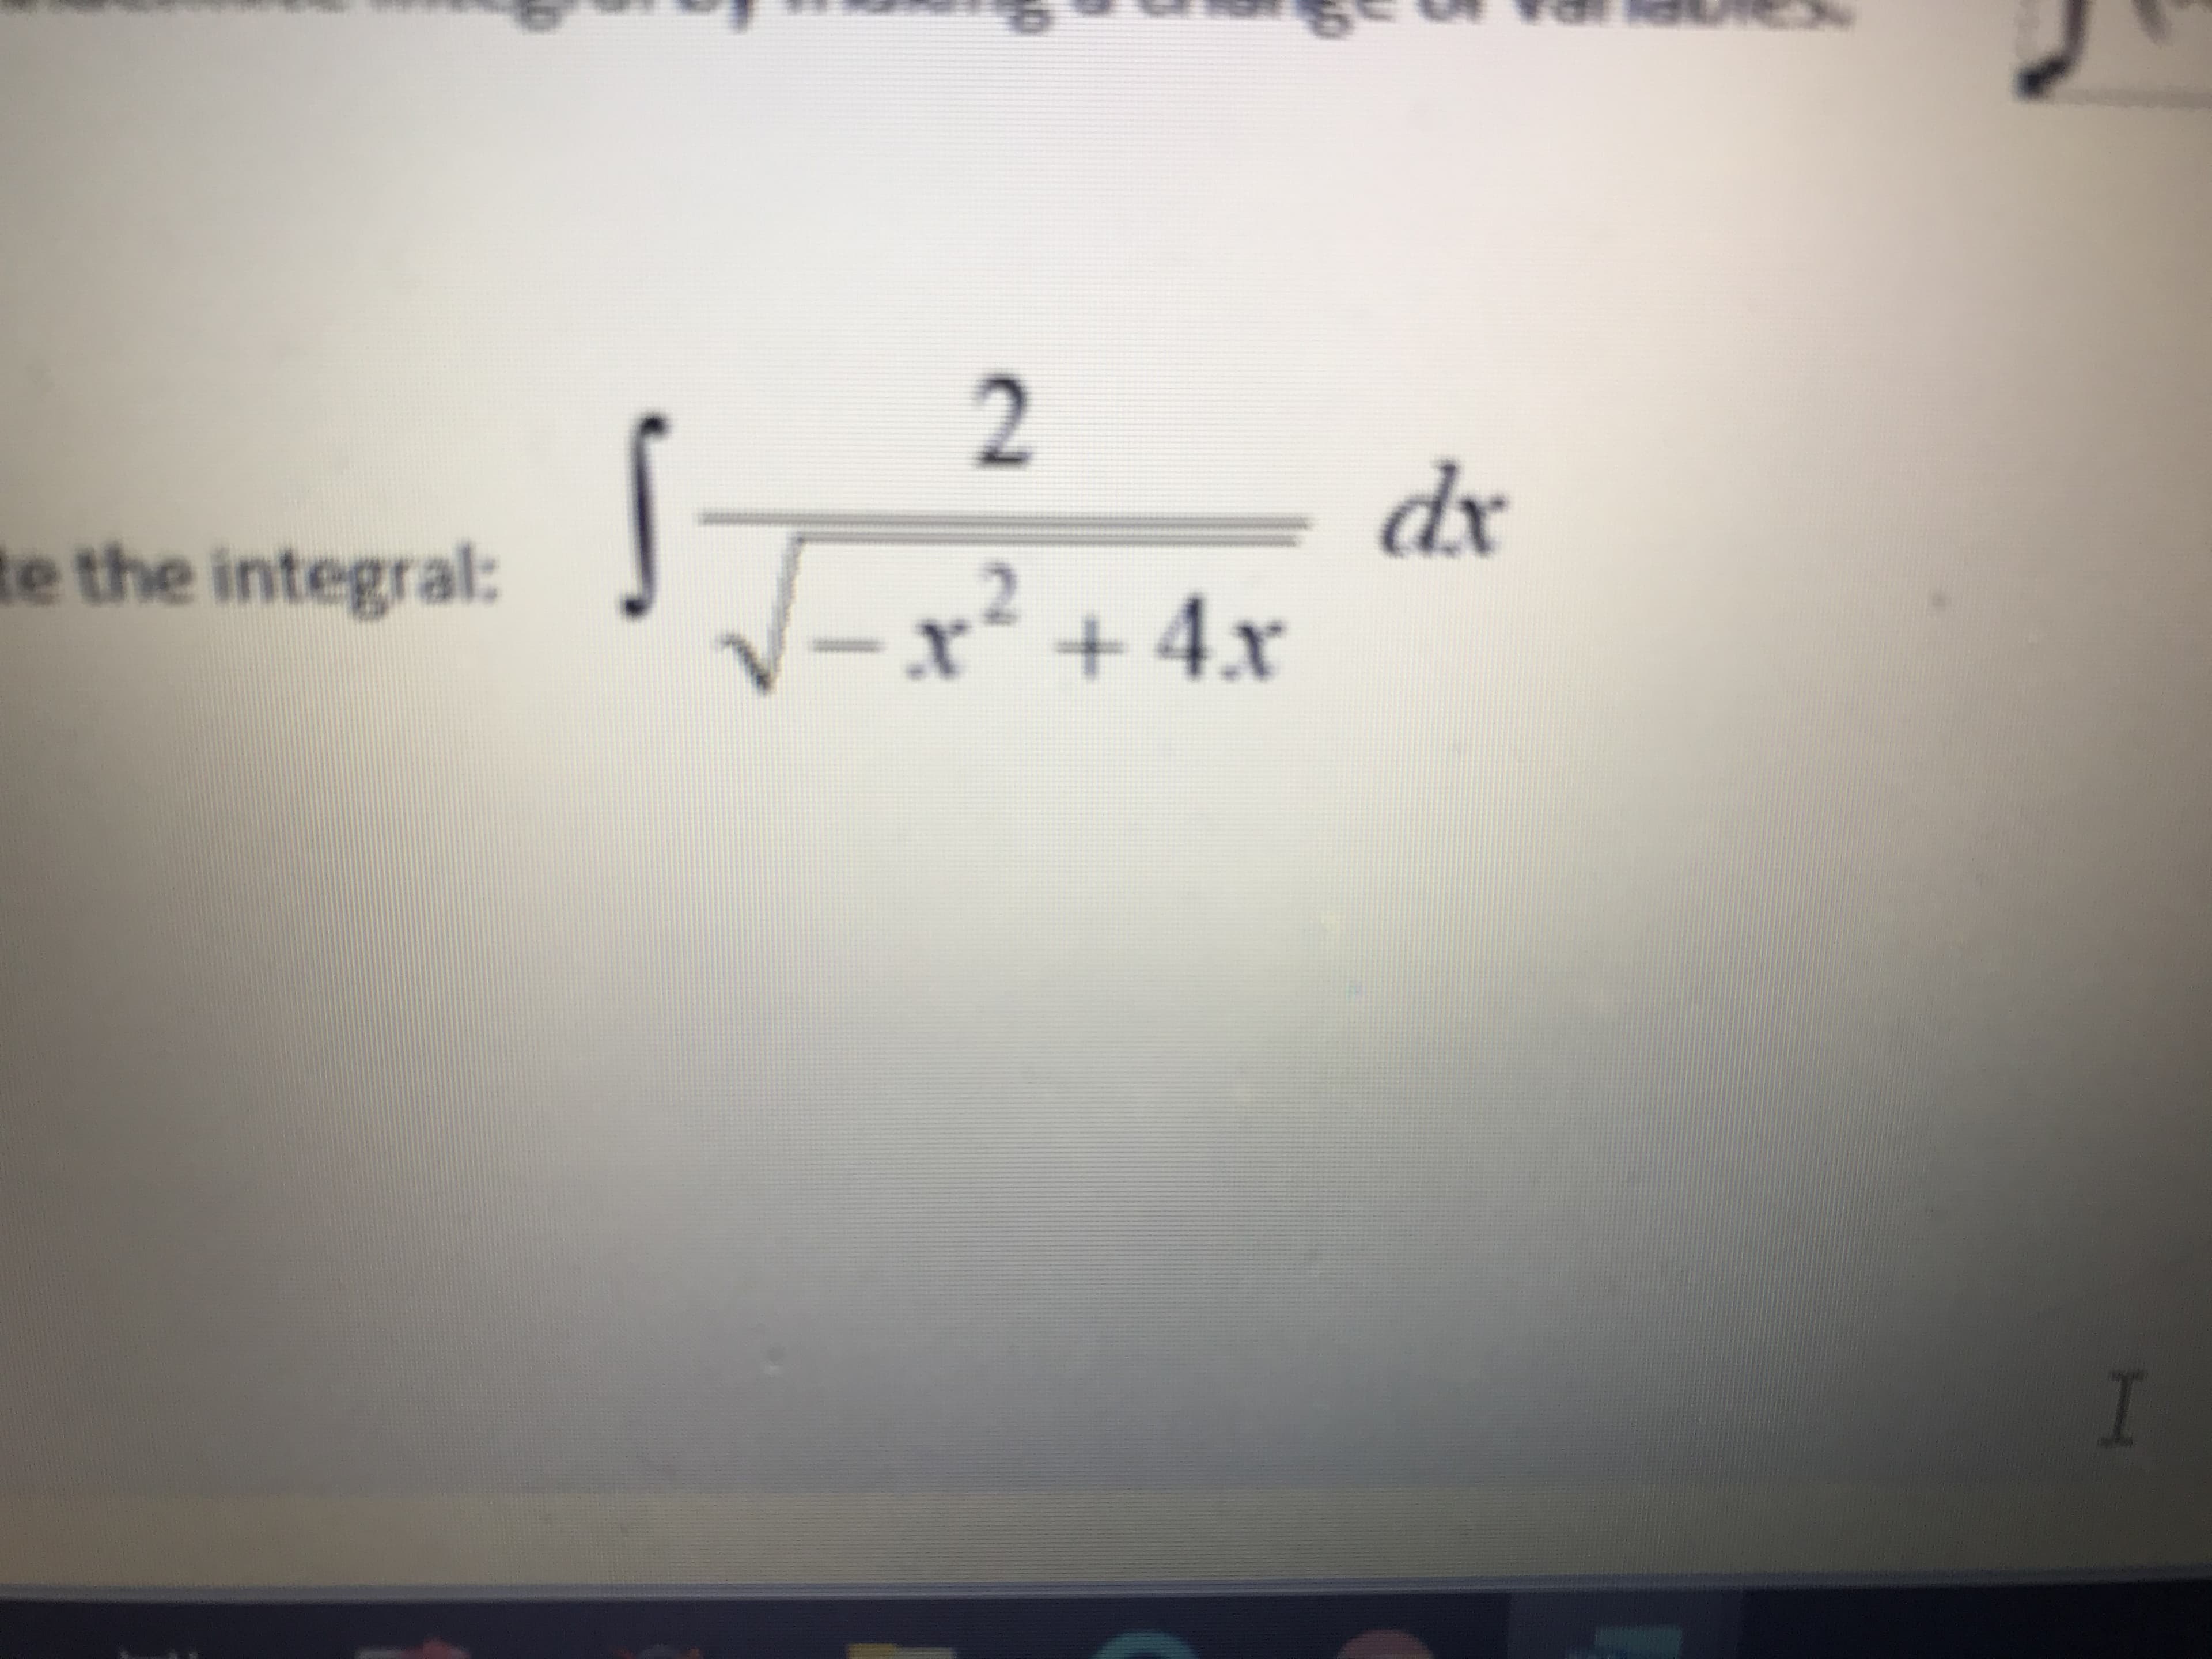 2
dr
- x + 4x
te the integral:
I
